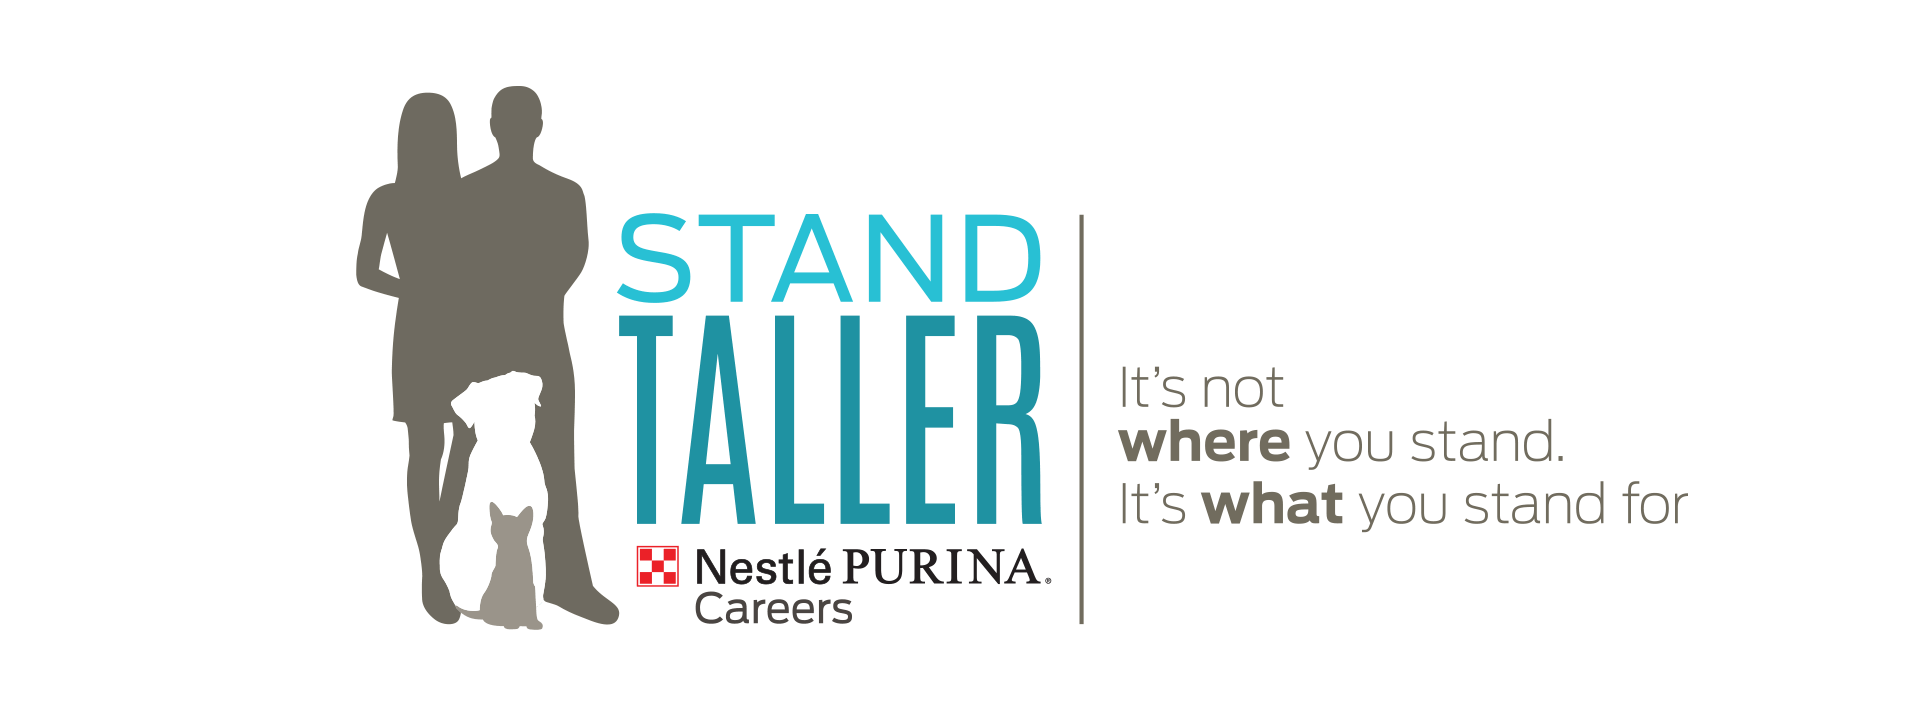 Nestle Brand Logo - Stand Taller Logo. Toolkit: Nestlé Purina PetCare Careers